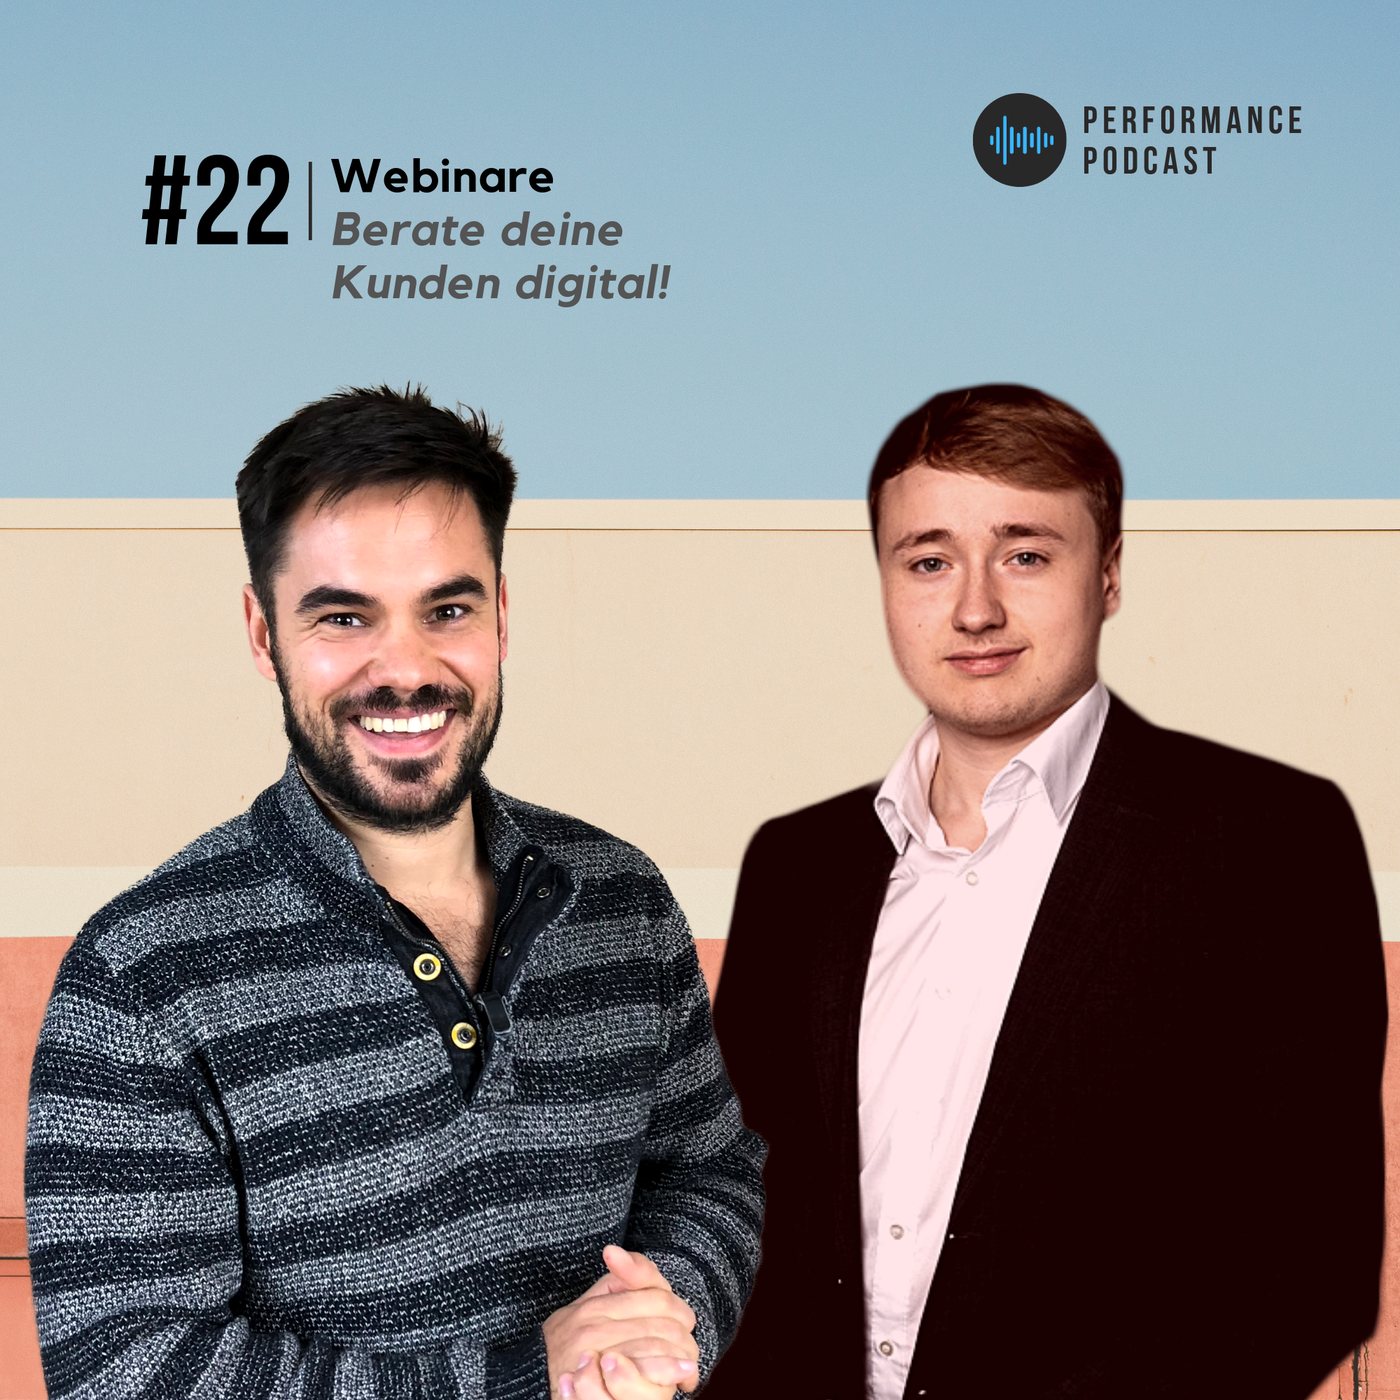 Webinare – Berate deine Kunden digital! | #22 Perforamance Podcast